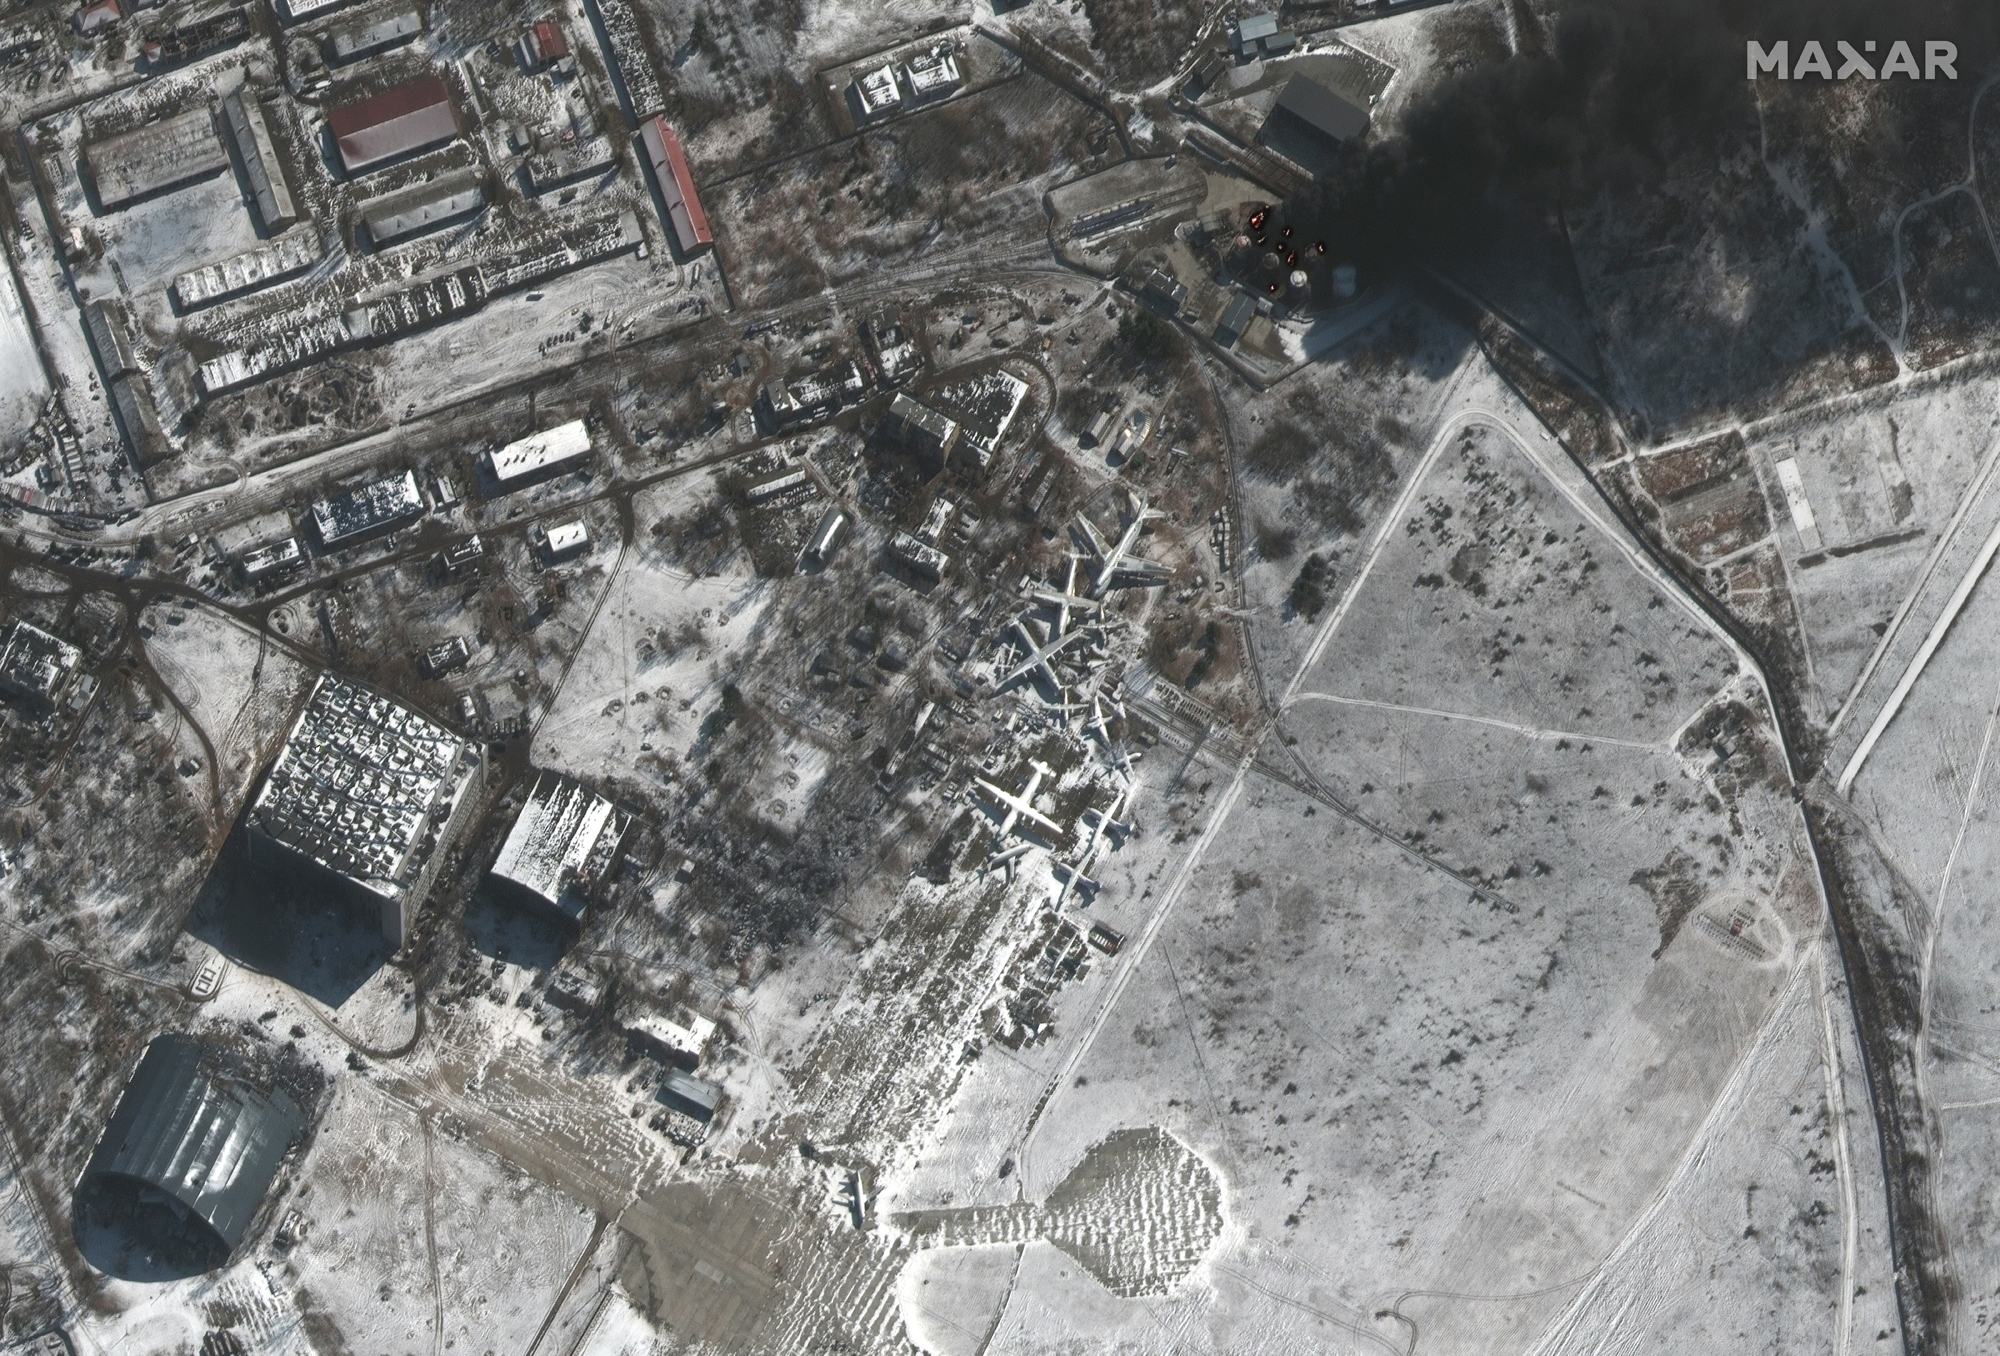 This Maxar satellite image shows uel storage tanks on fire and military equipment deployed around Antonov Airport near Kyiv, Ukraine on March 10, 2022.